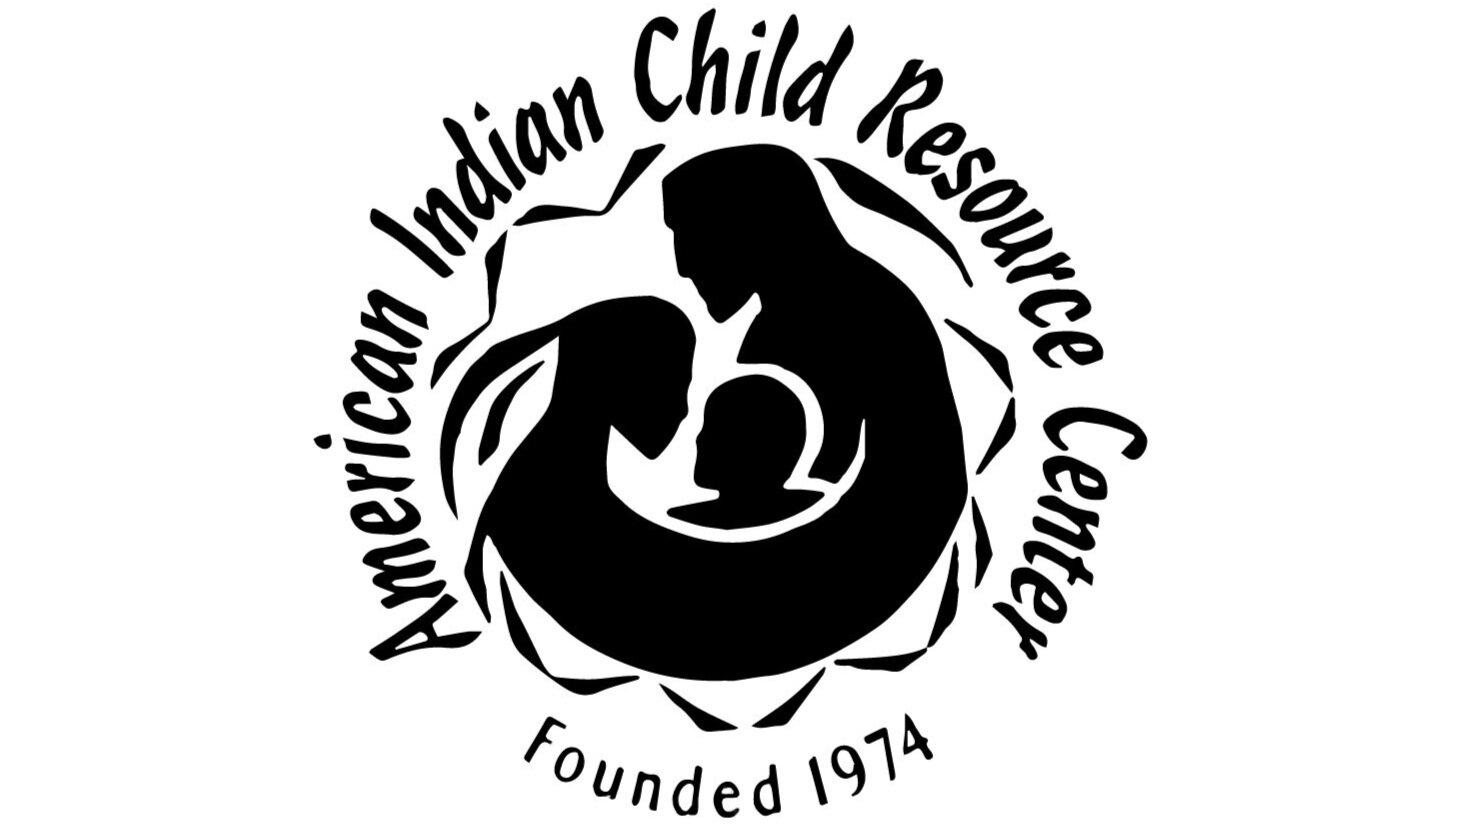 American Indian Child Resource Center logo